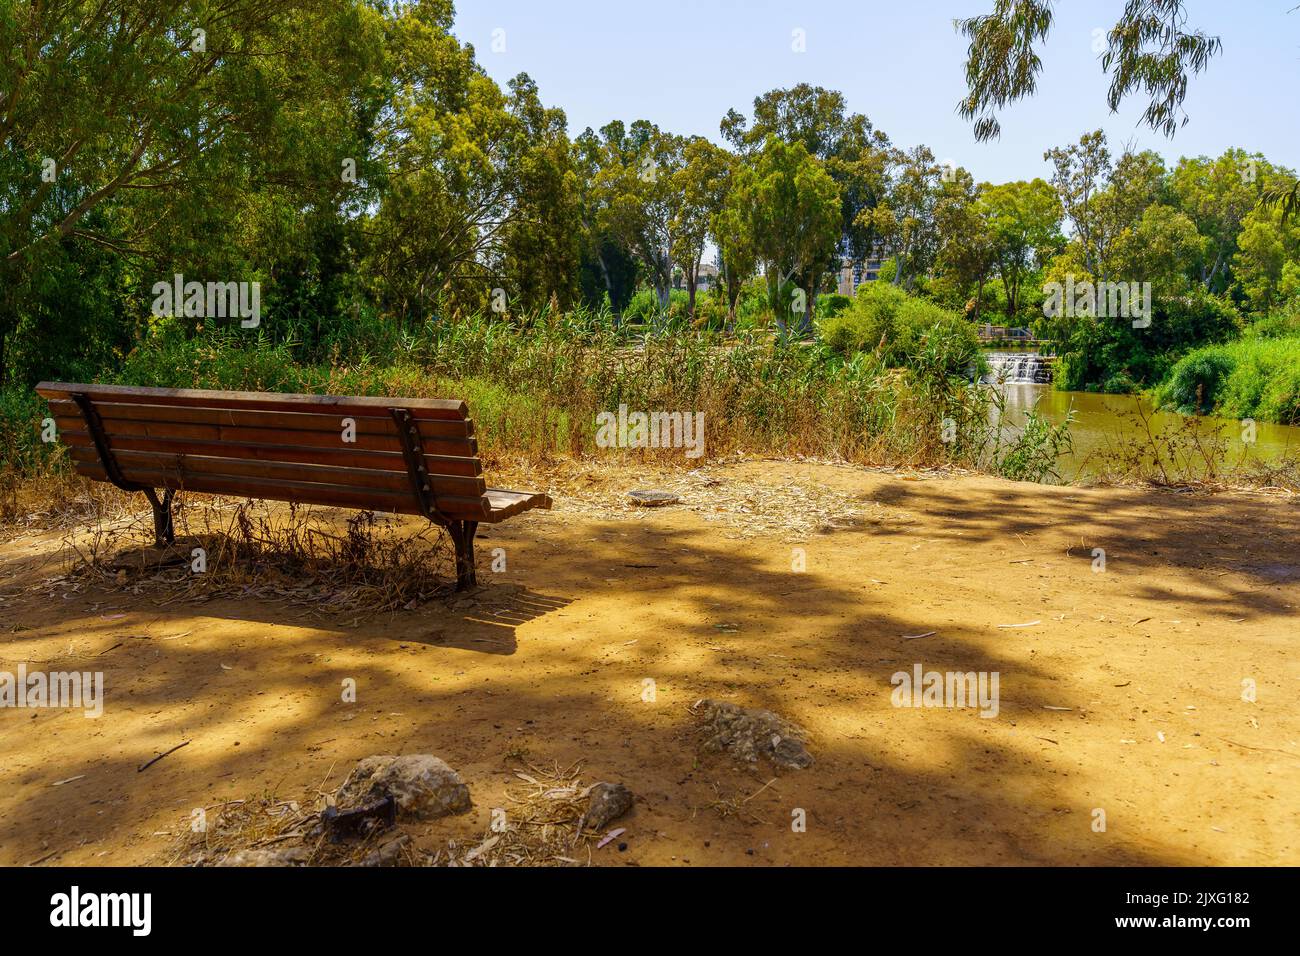 View of a bench and Eucalyptus trees along the Yarkon River, in the Yarkon Park, Tel-Aviv, Israel Stock Photo